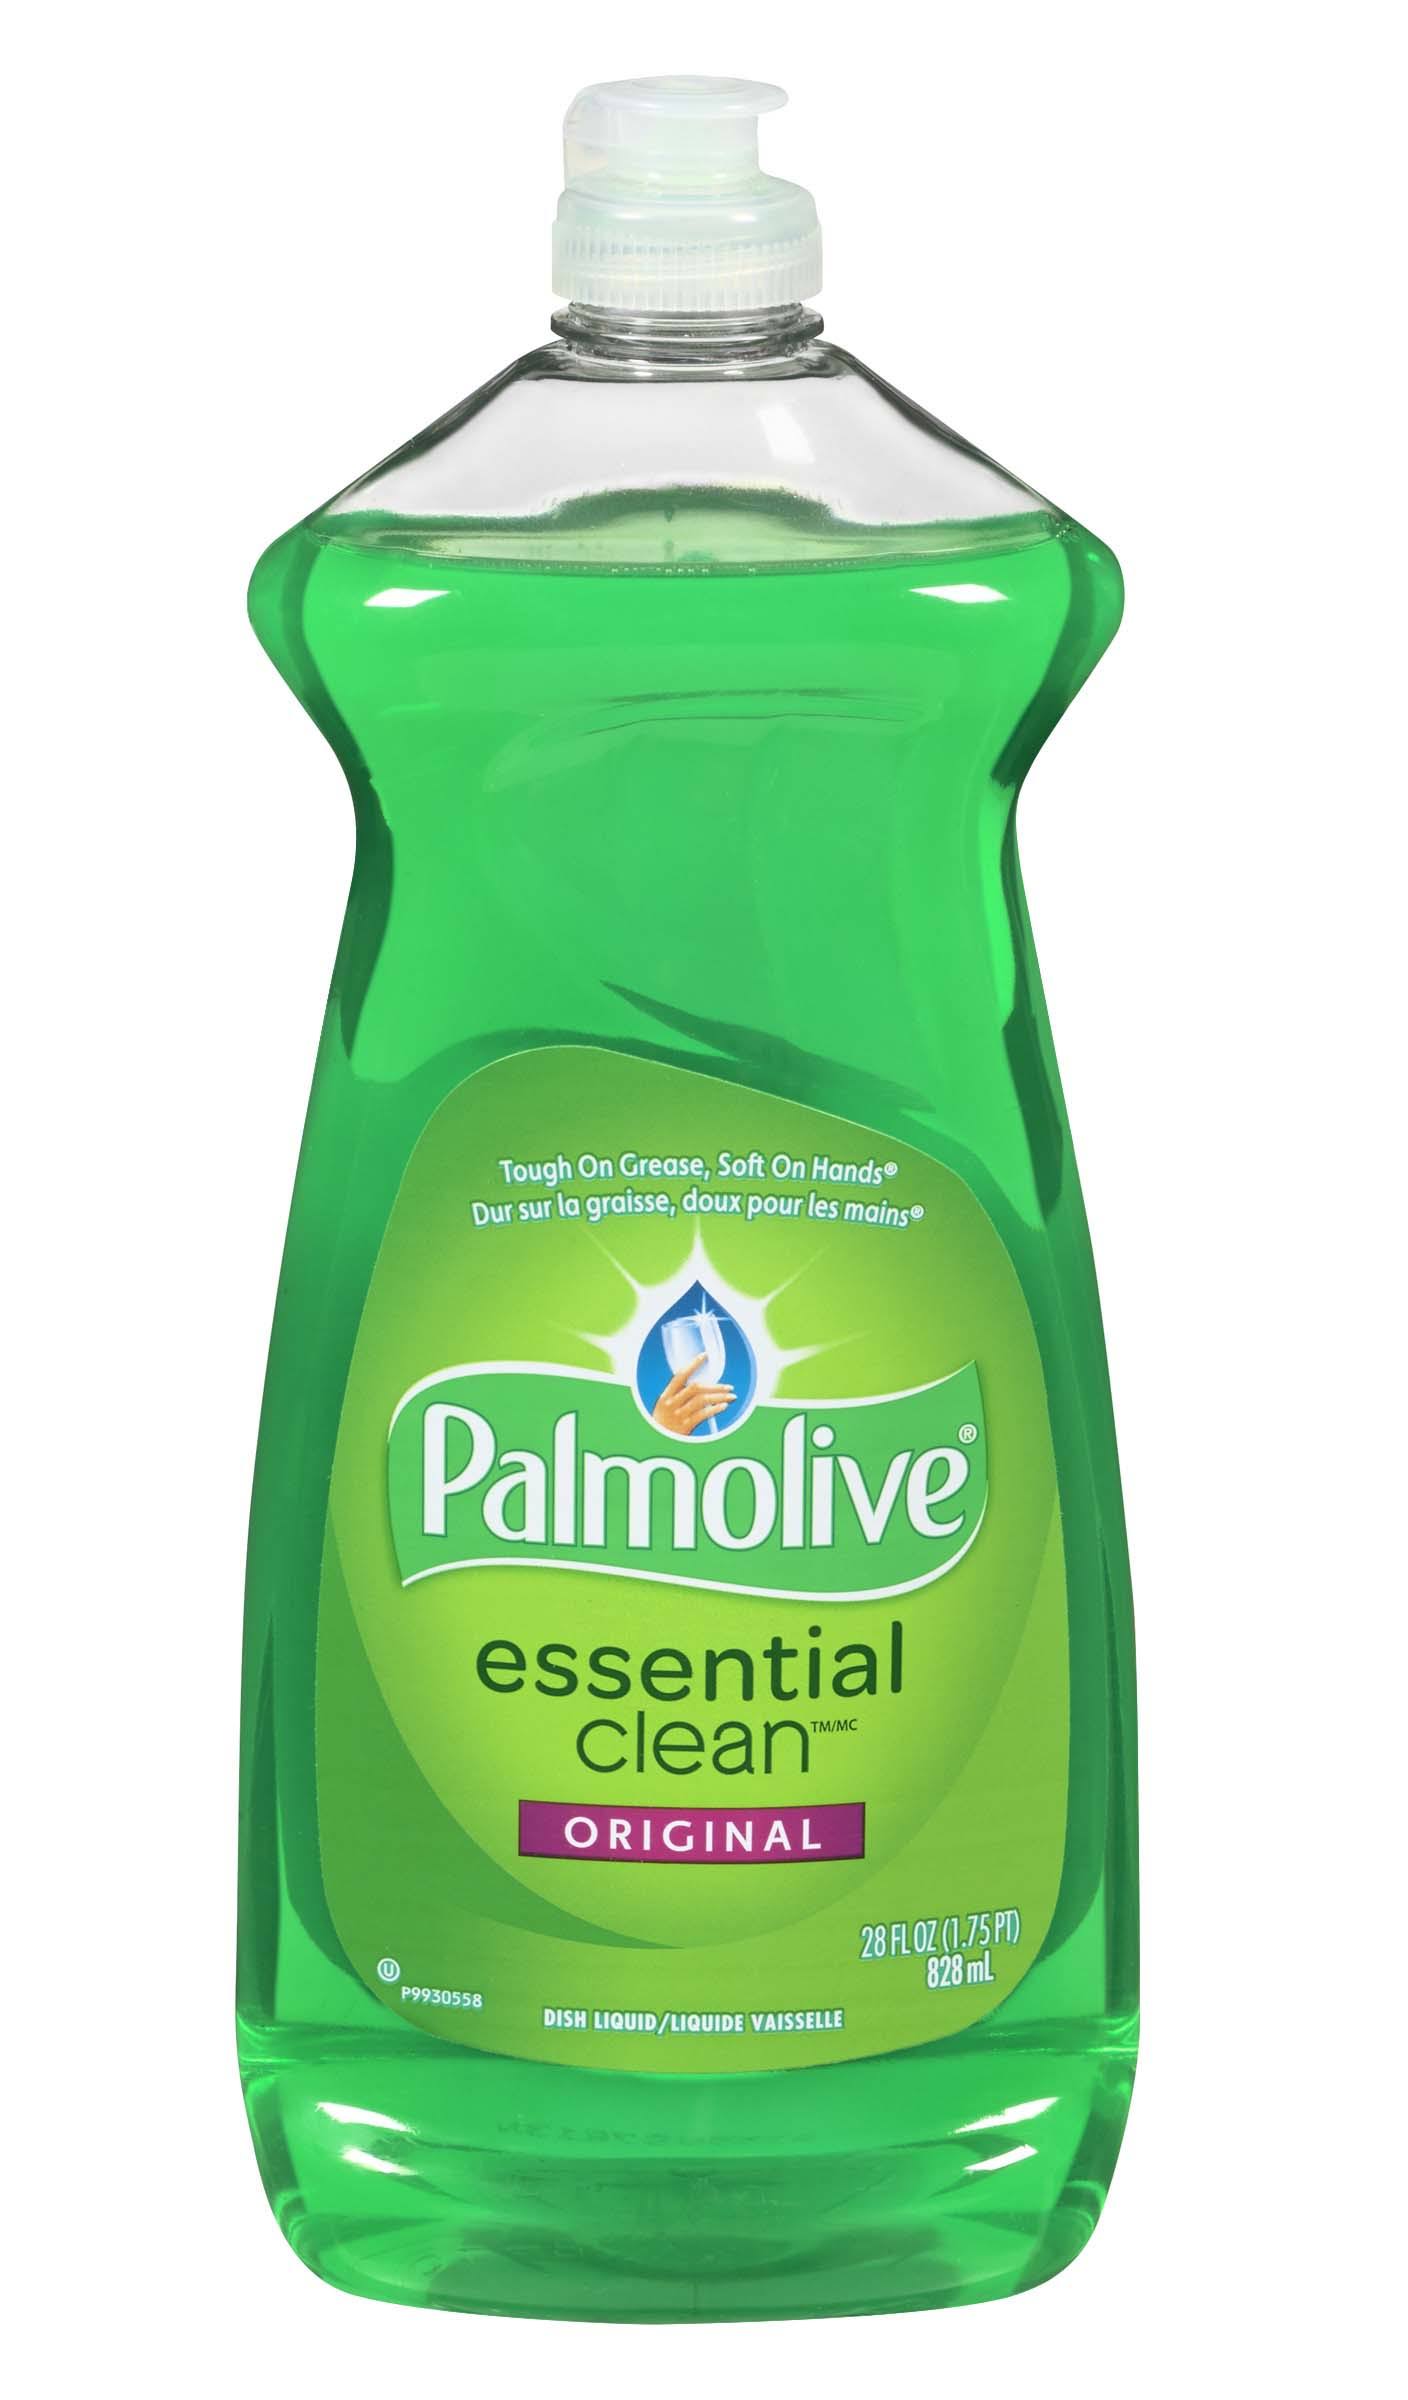 Palmolive Dishwashing Liquid & Hand Soap - Original Scent, 28oz